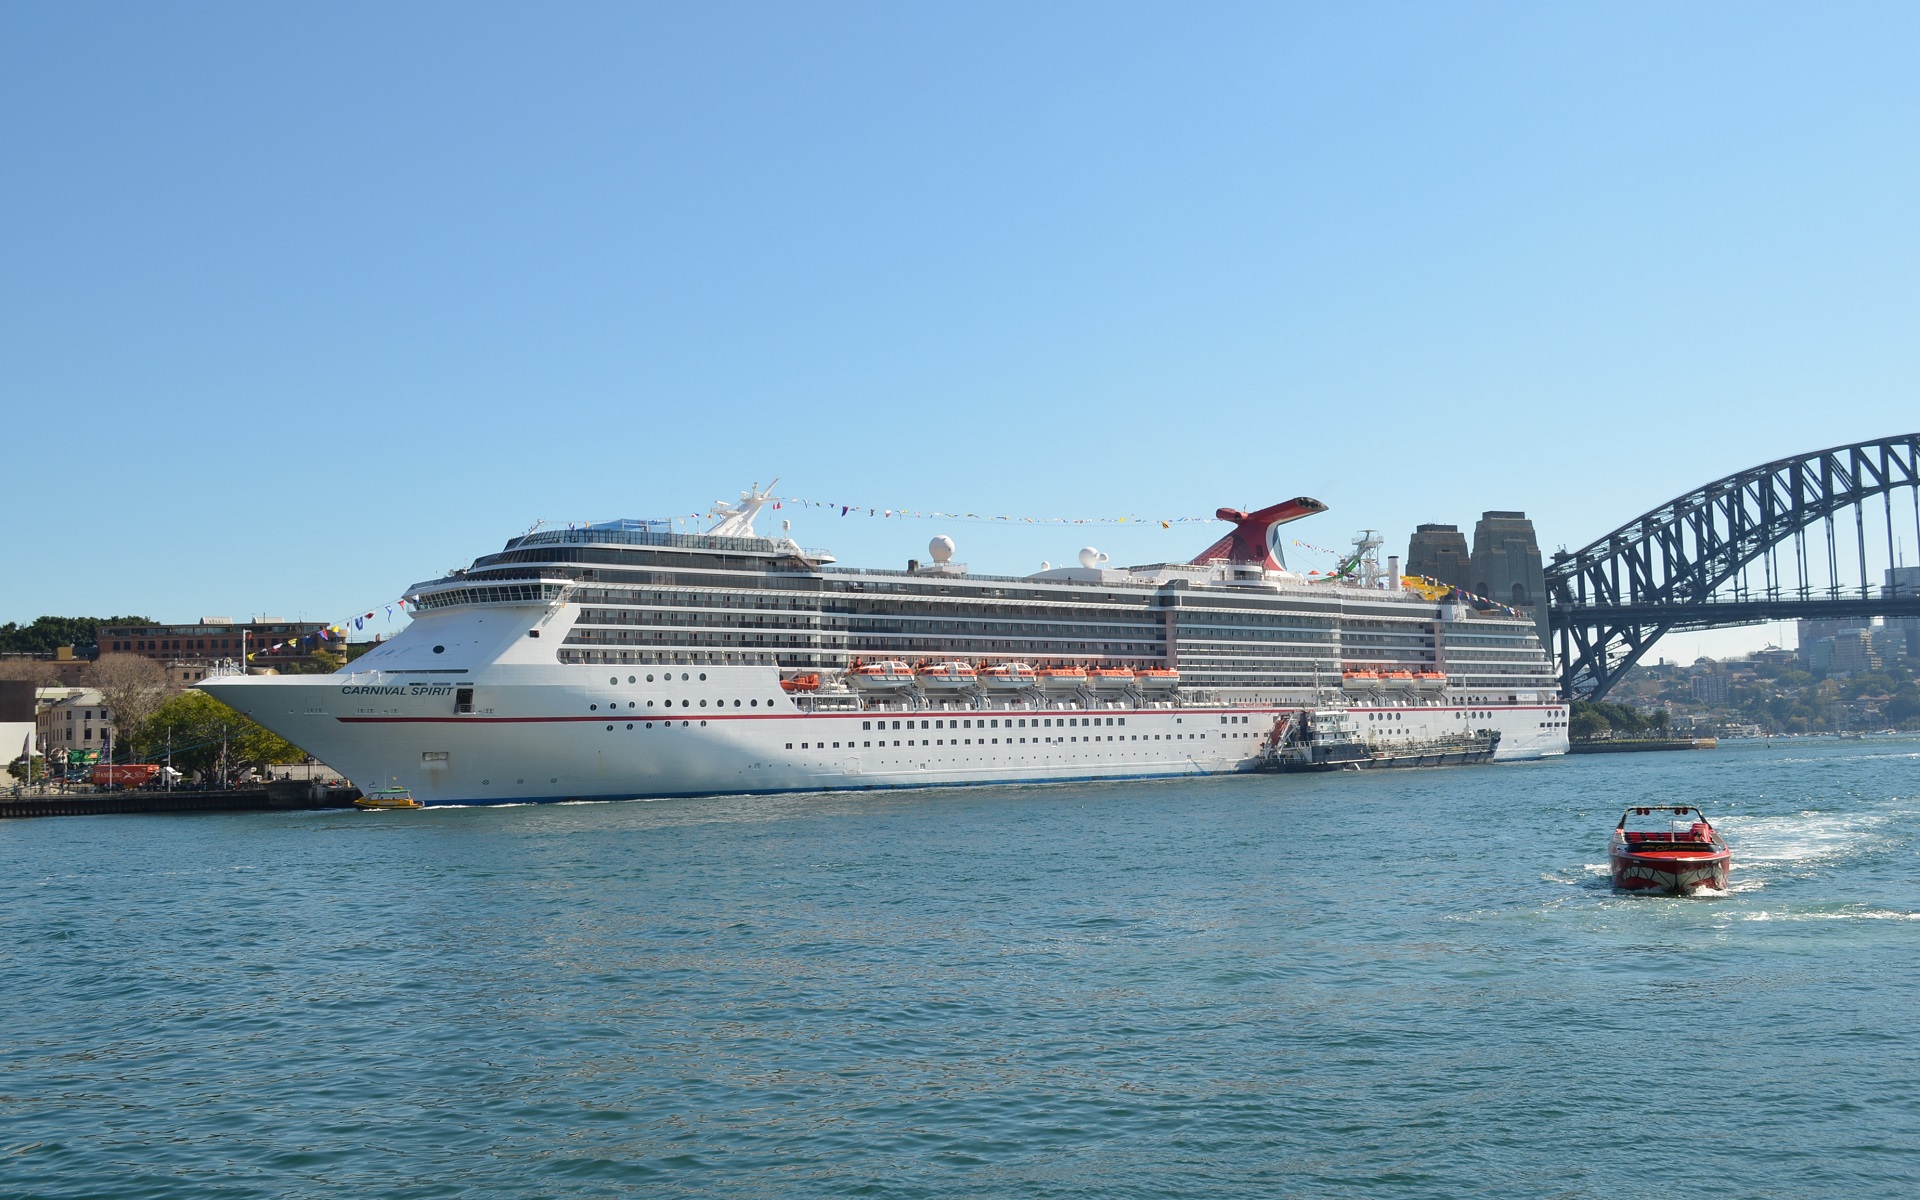 vehicles, carnival spirit, australia, boat, cruise ship, ship, sydney harbour, sydney